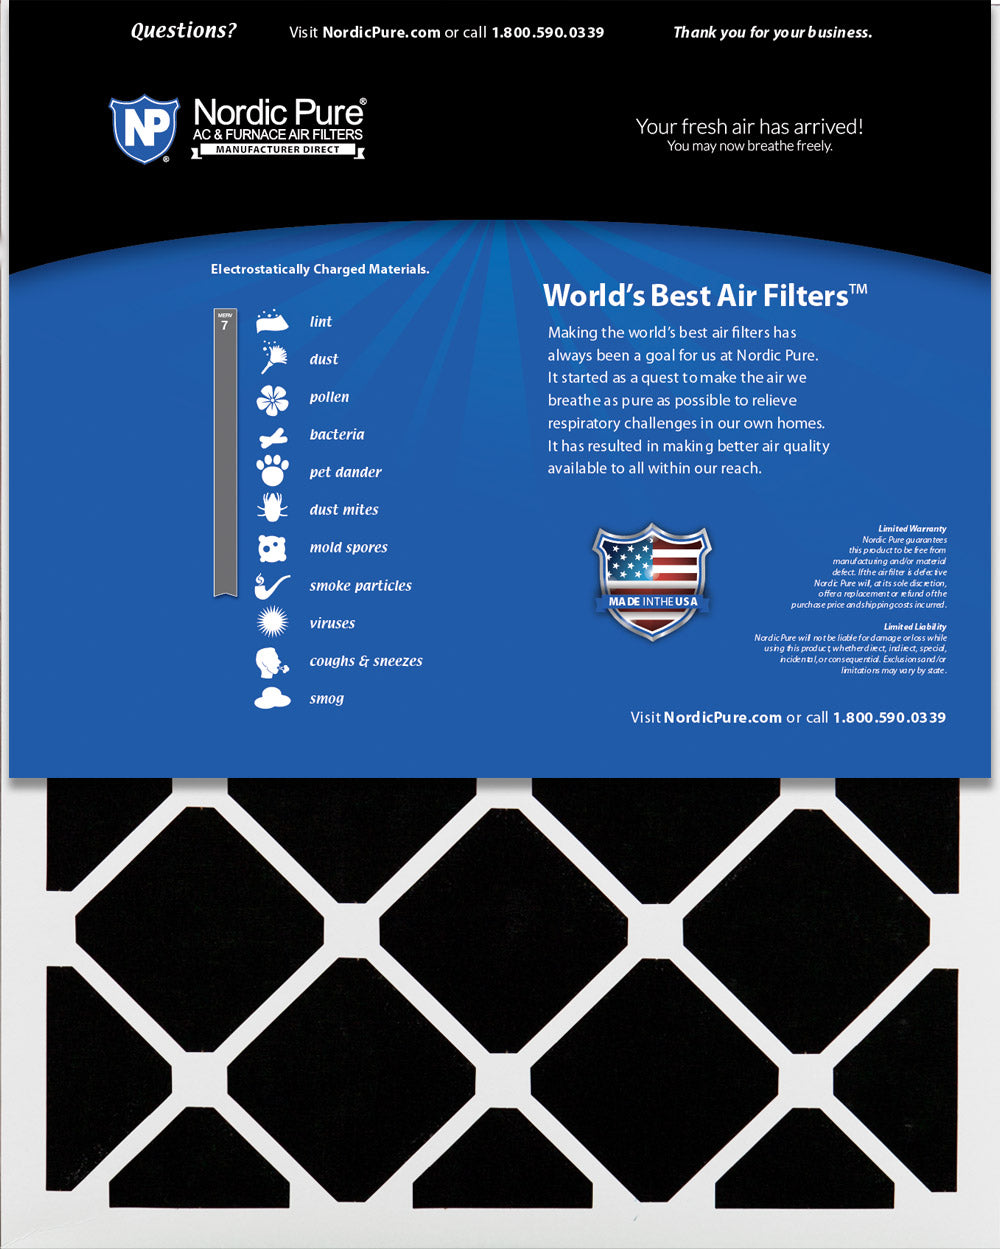 8x14x1 Exact MERV 7 Plus Carbon AC Furnace Filters